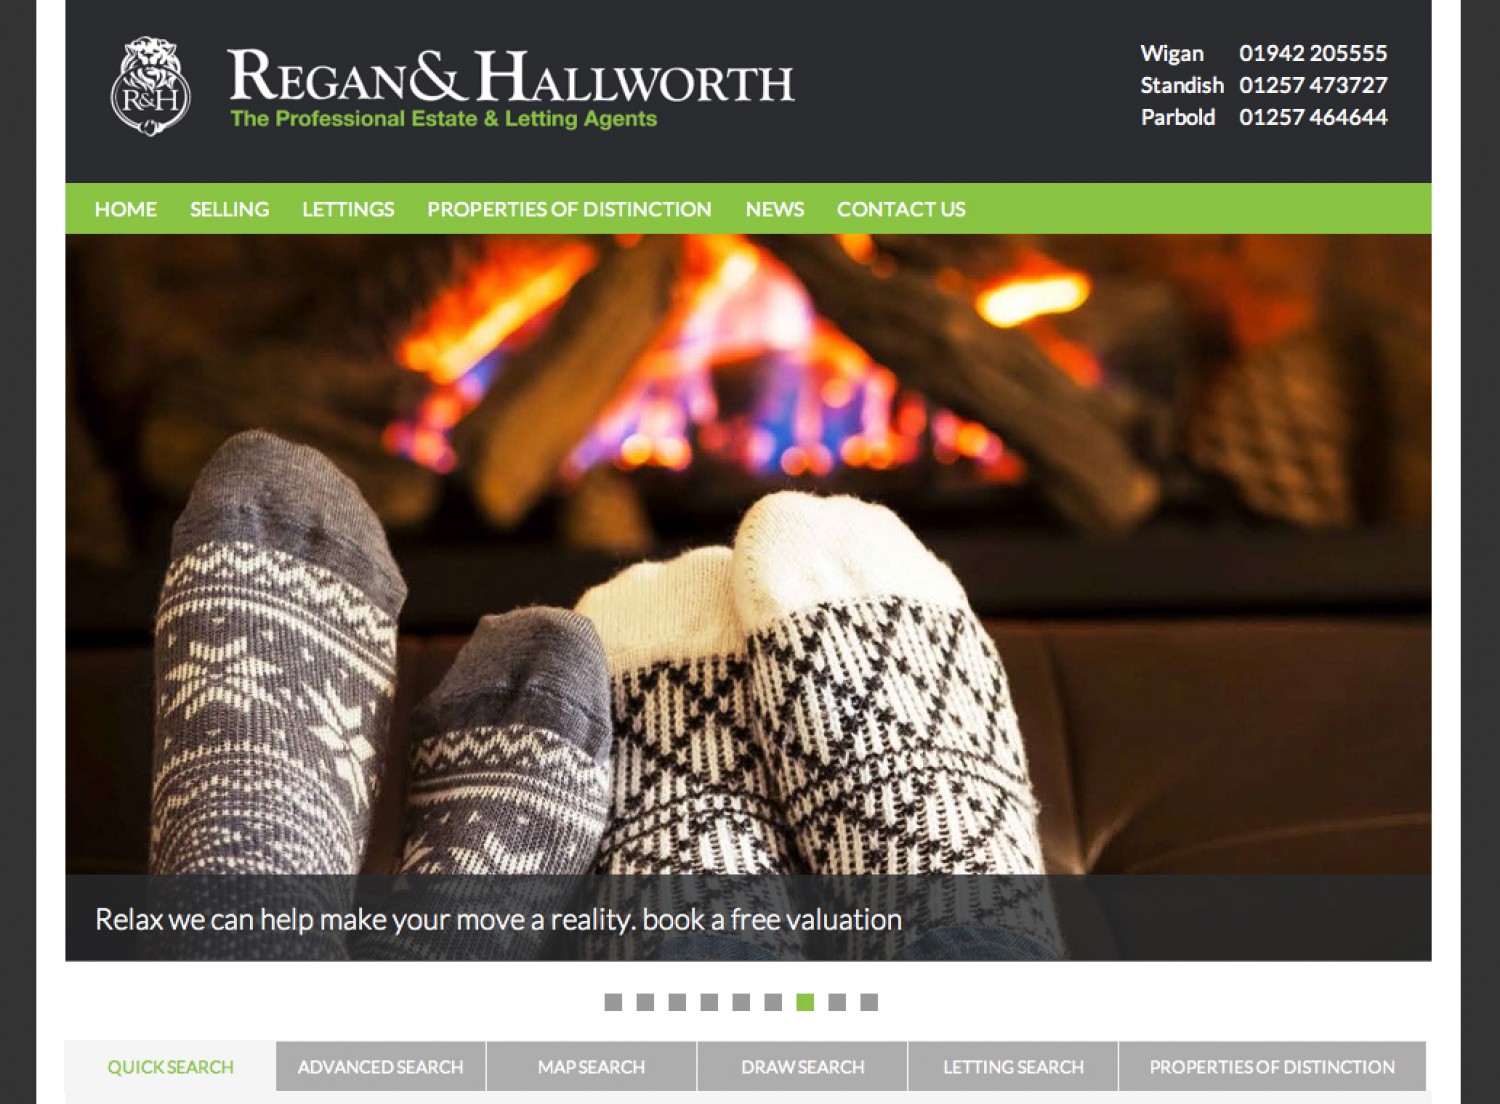 Regan & Hallworth's new website launched